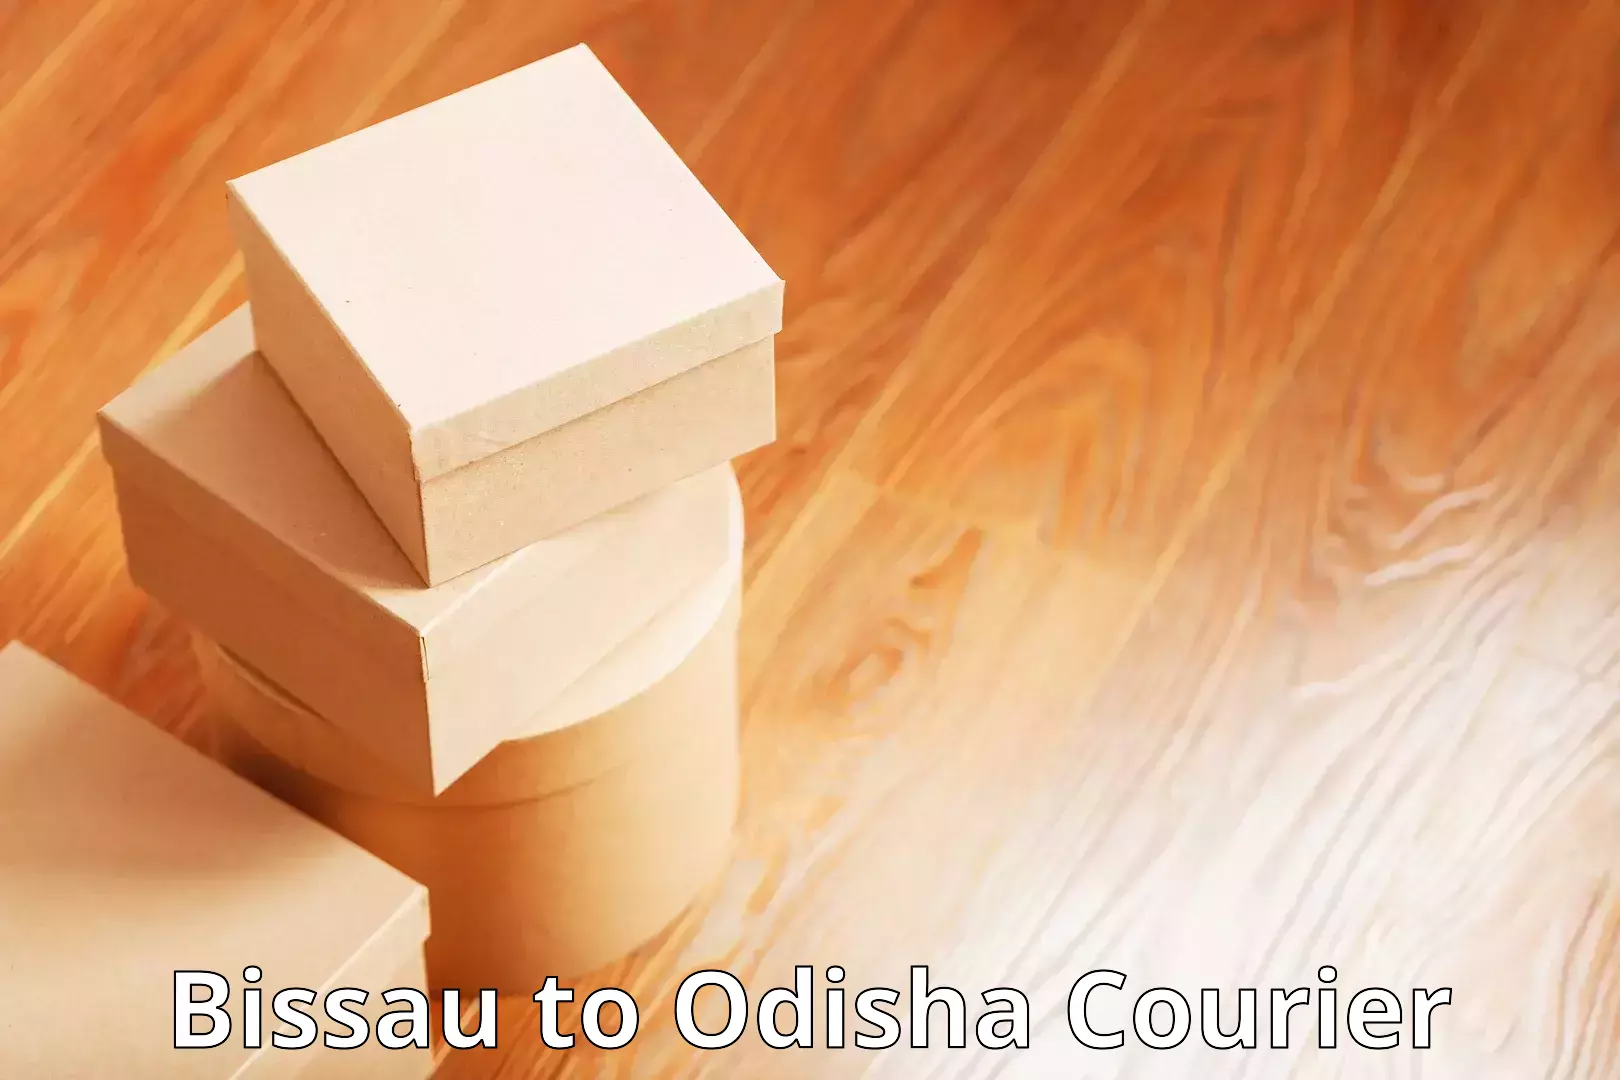 Efficient order fulfillment Bissau to Odisha